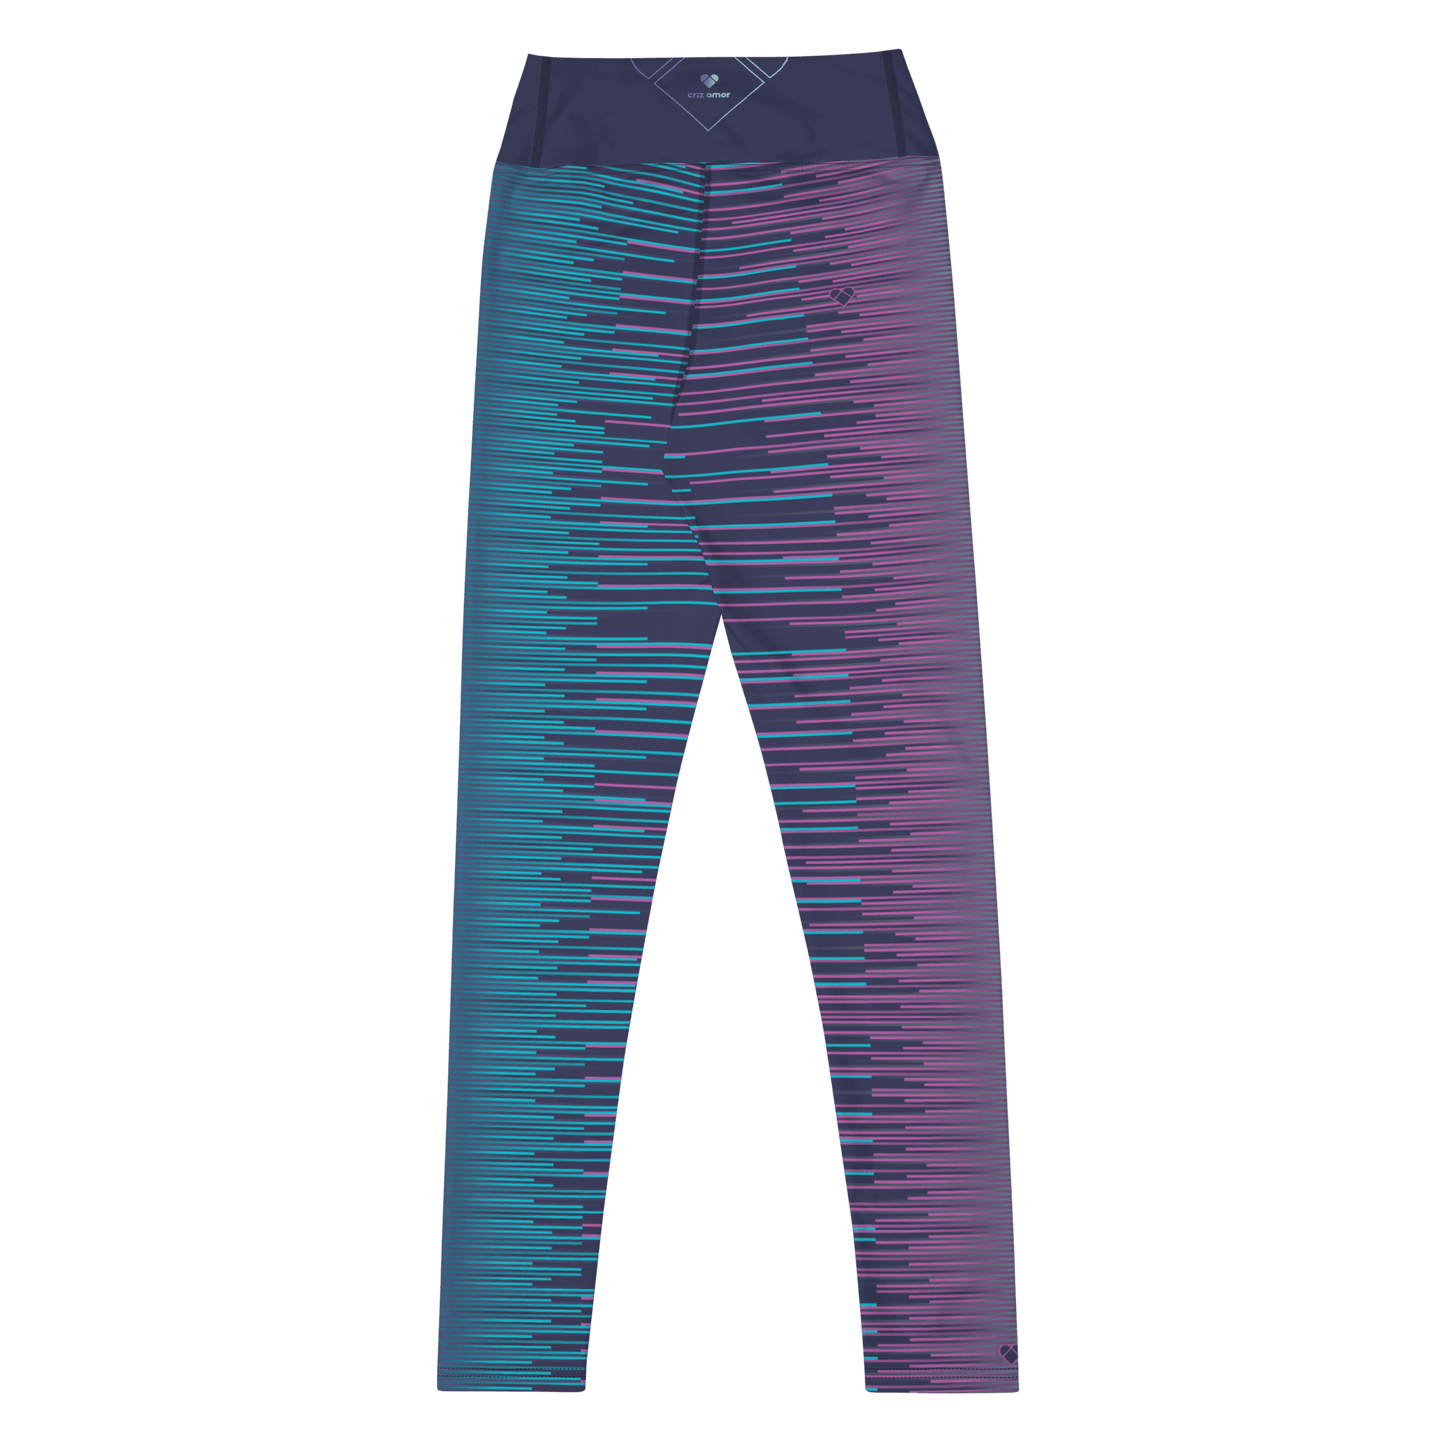 Activewear: Dark Slate Blue Yoga Leggings by CRiZ AMOR for Women